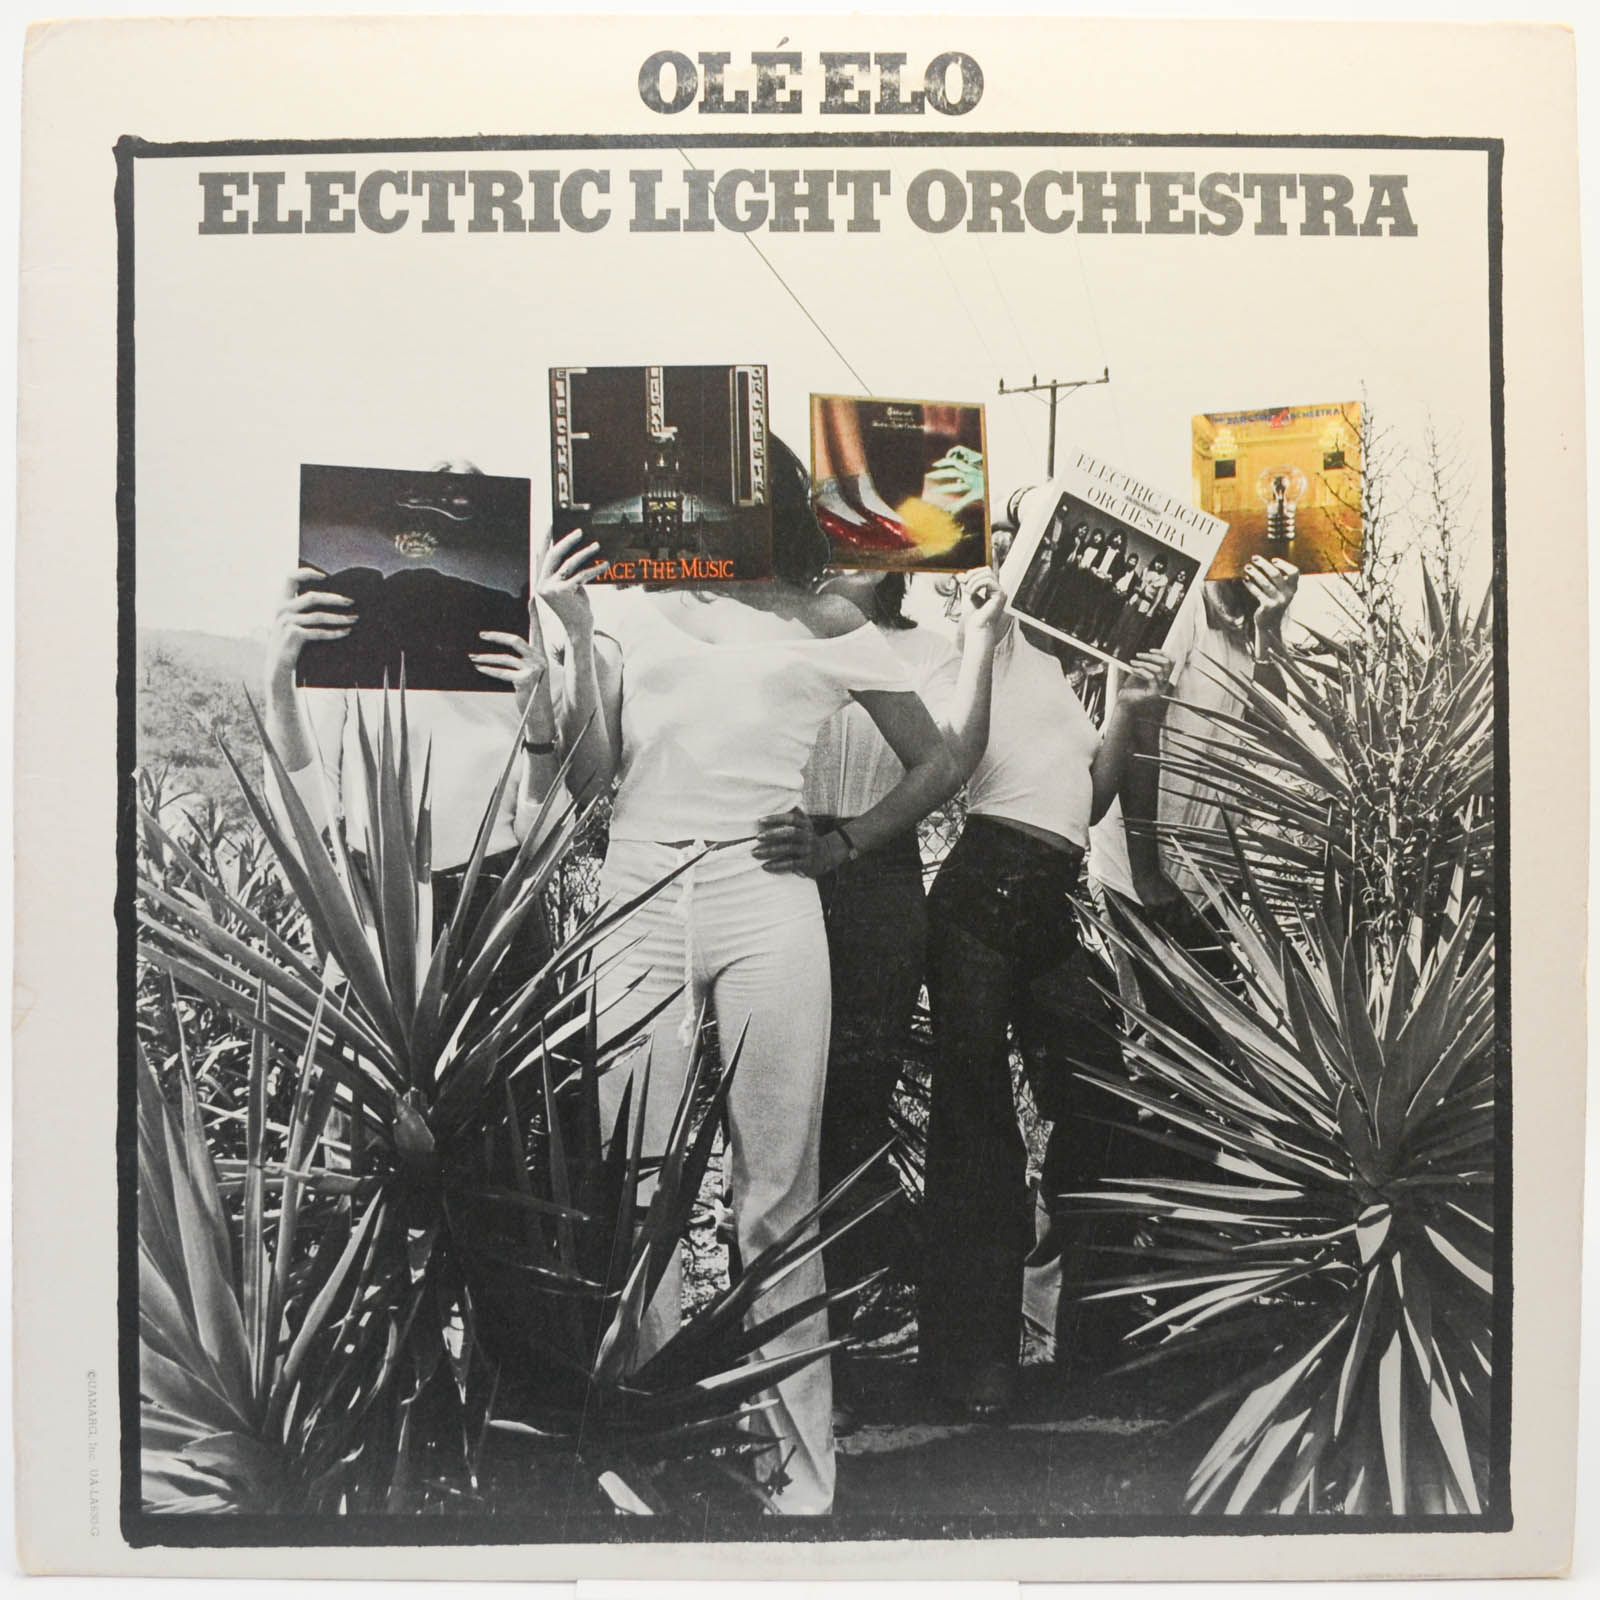 Electric Light Orchestra — Olé ELO (USA), 1976